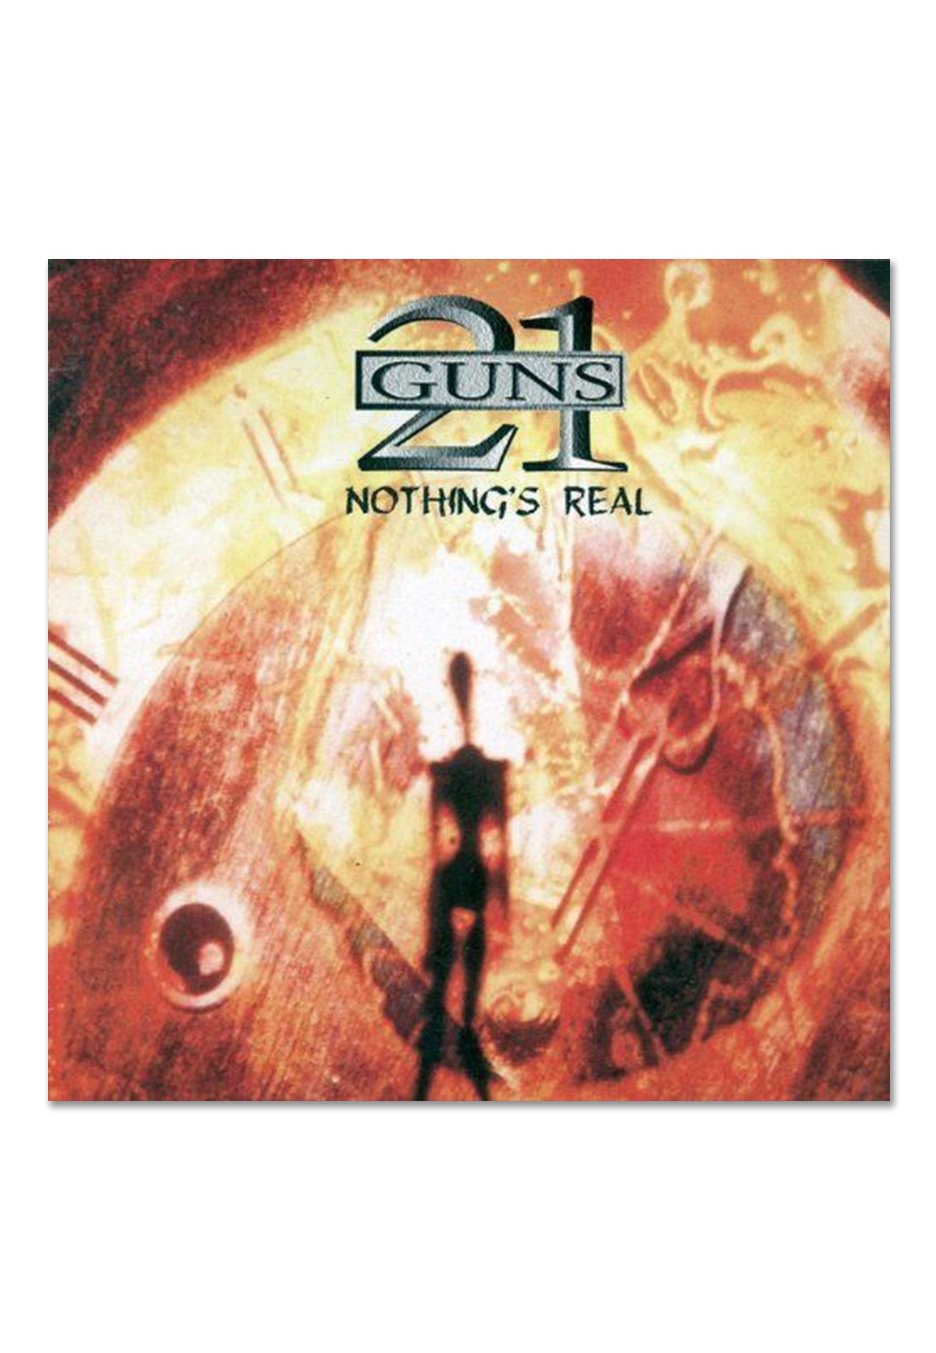 21 Guns - Nothing's Real - Vinyl